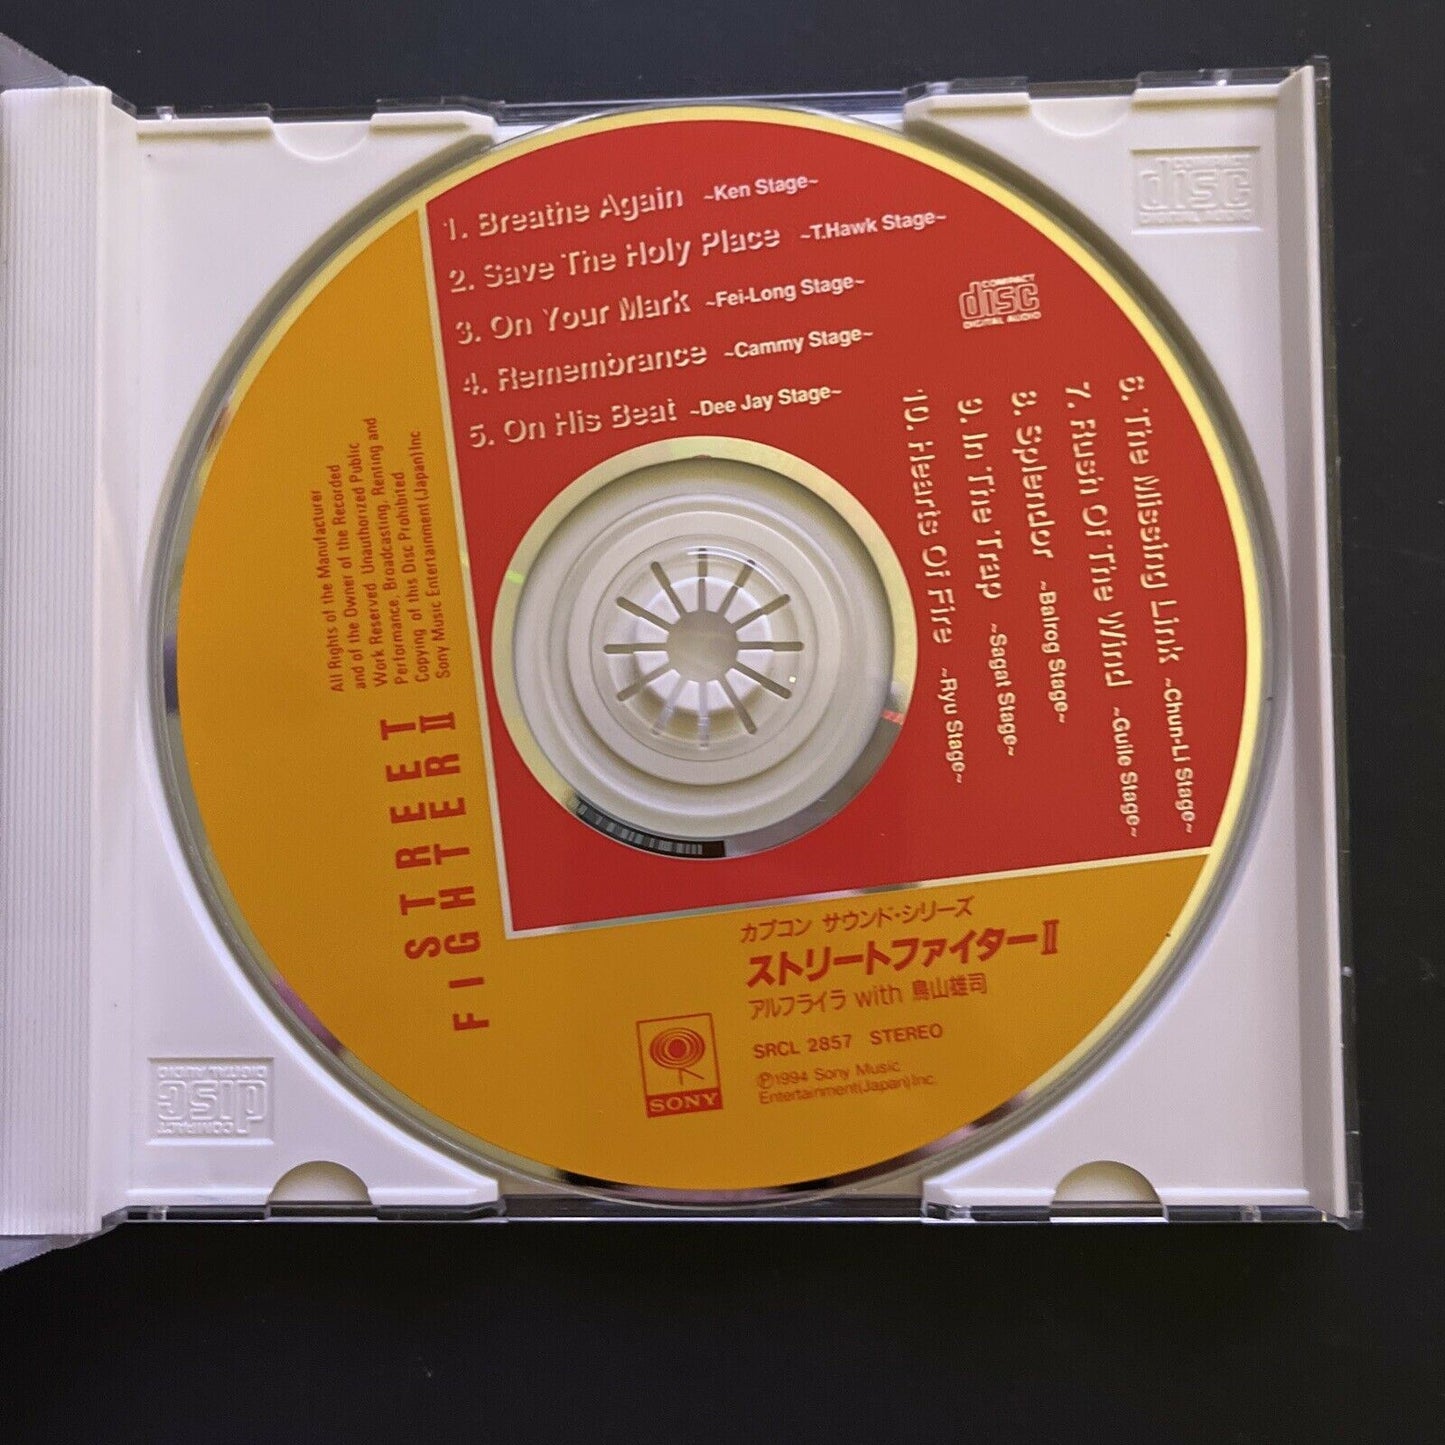 Official Capcom Street Fighter II Soundtrack with Yuki Toriyama (CD, 1994)